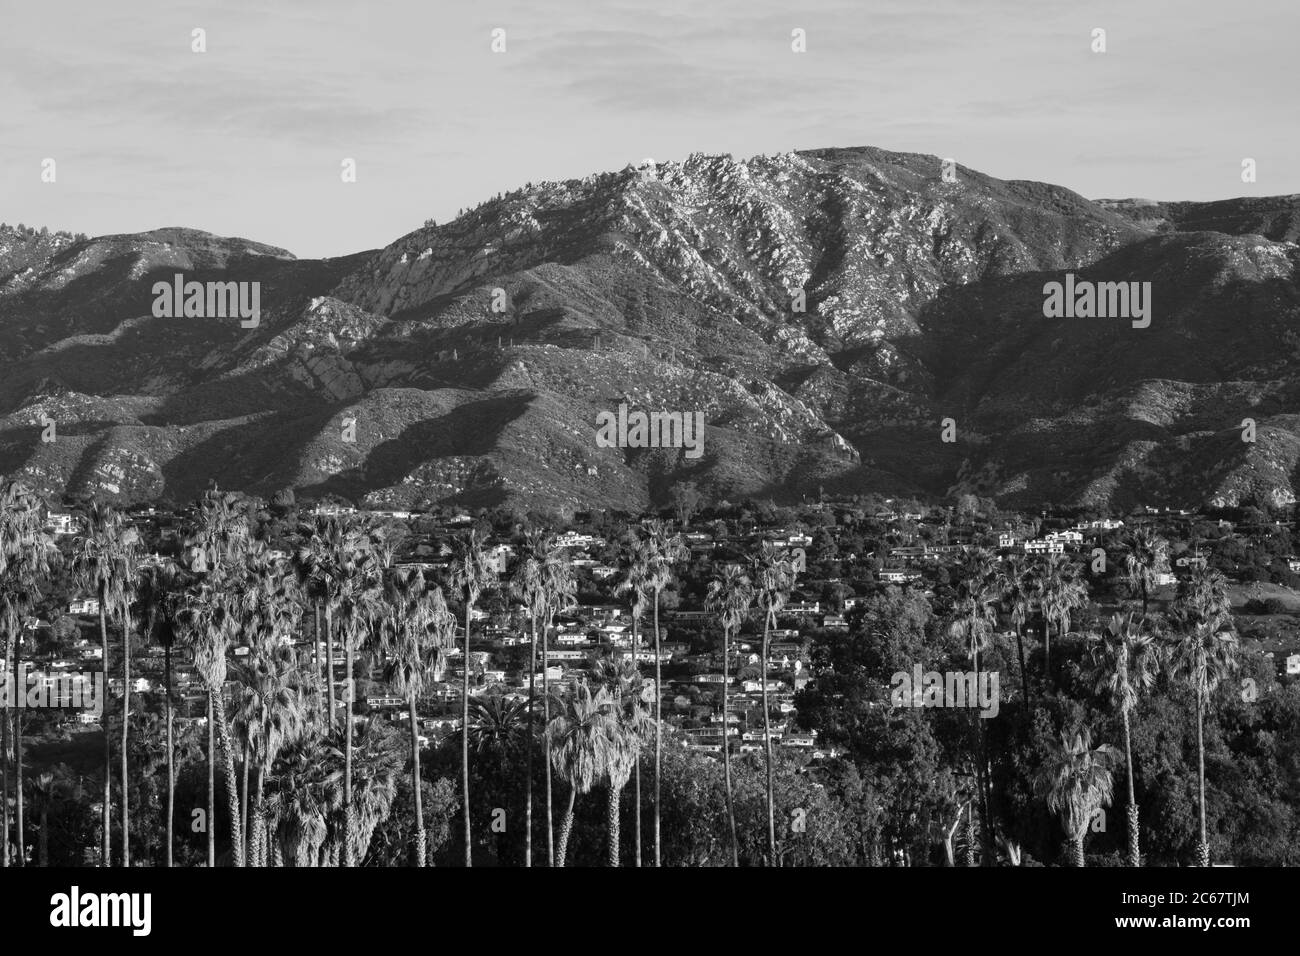 Palm trees against city houses standing at foot of hill, Santa Barbara, California, USA Stock Photo